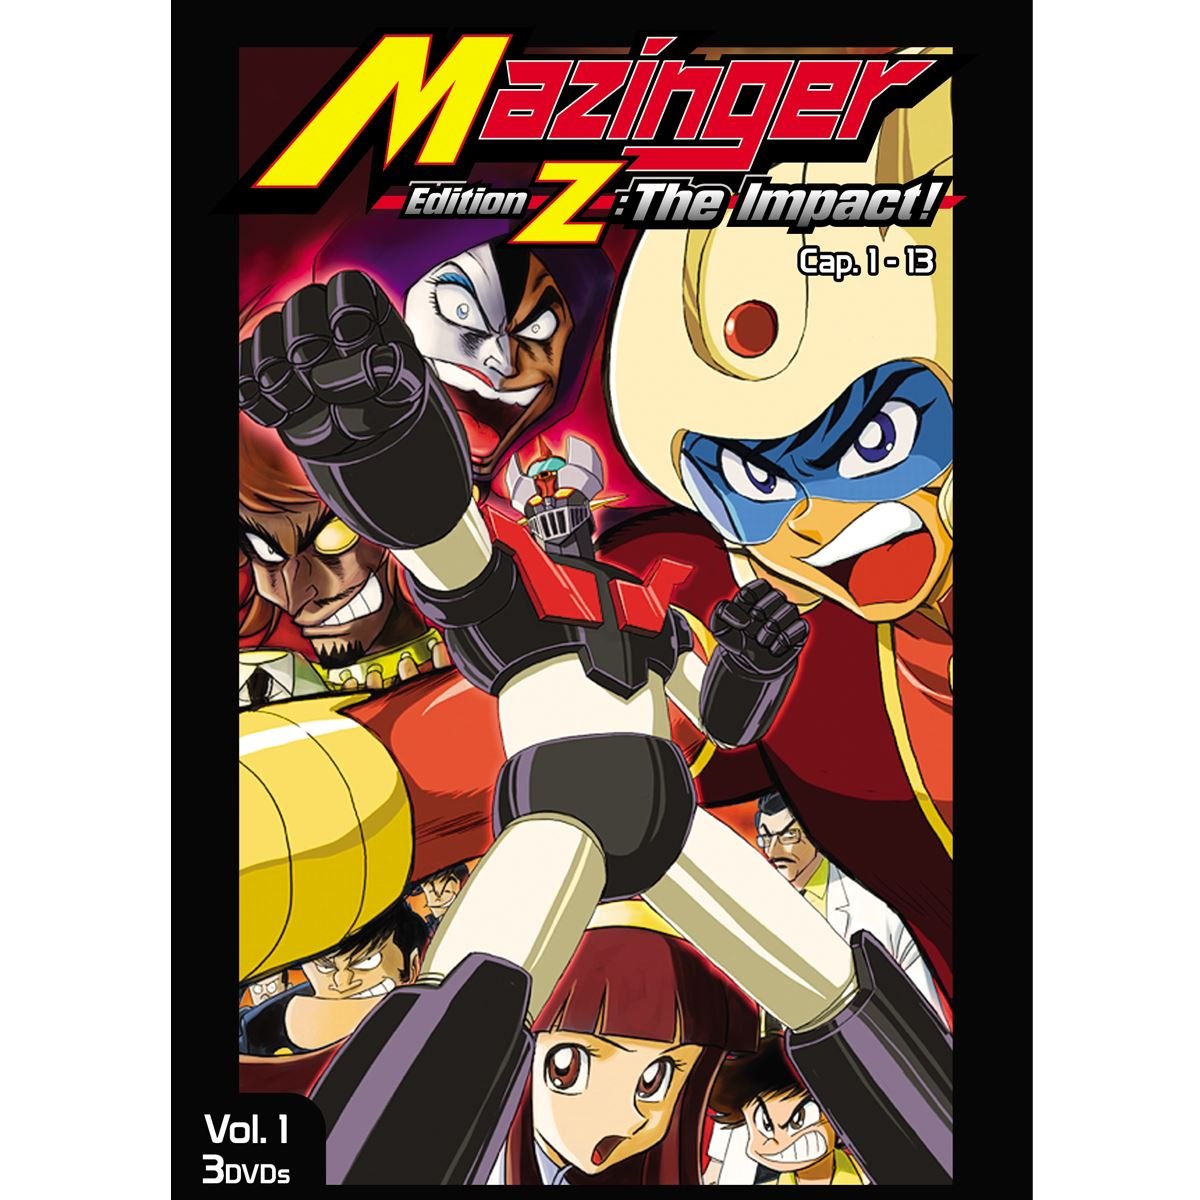 DVD Mazinger Z Edition The Impack Vol. 2